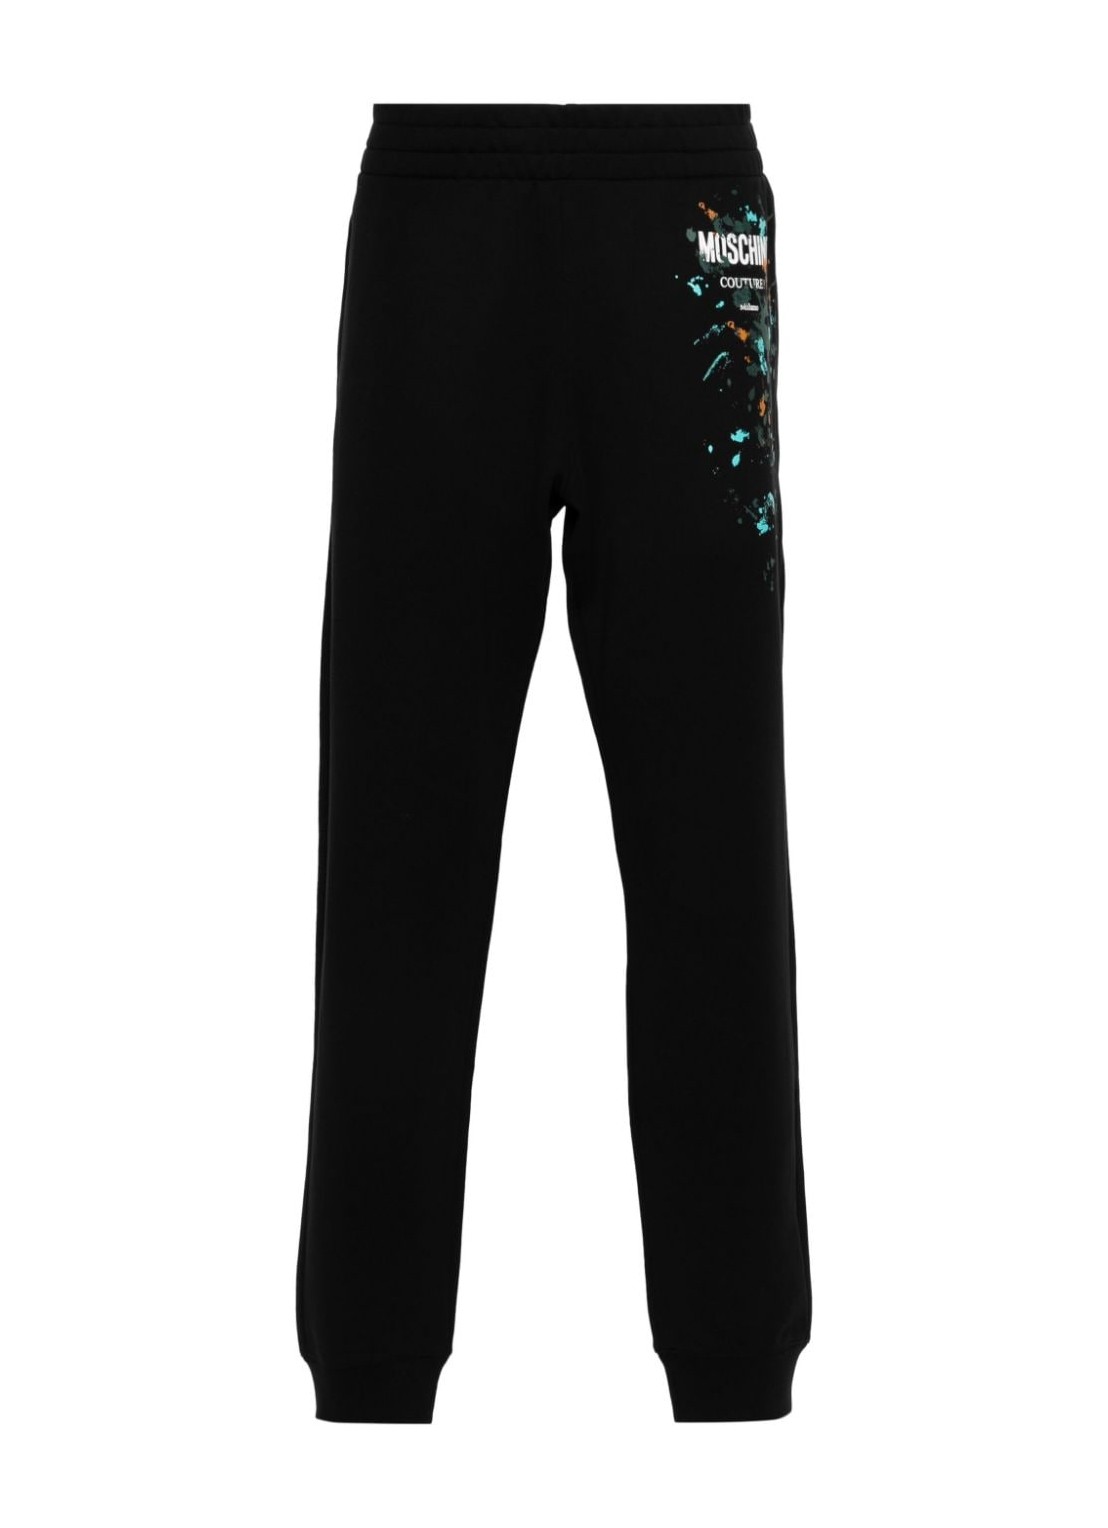 Pantalon moschino couture pant  man trousers 03622028 a1555 talla negro
 